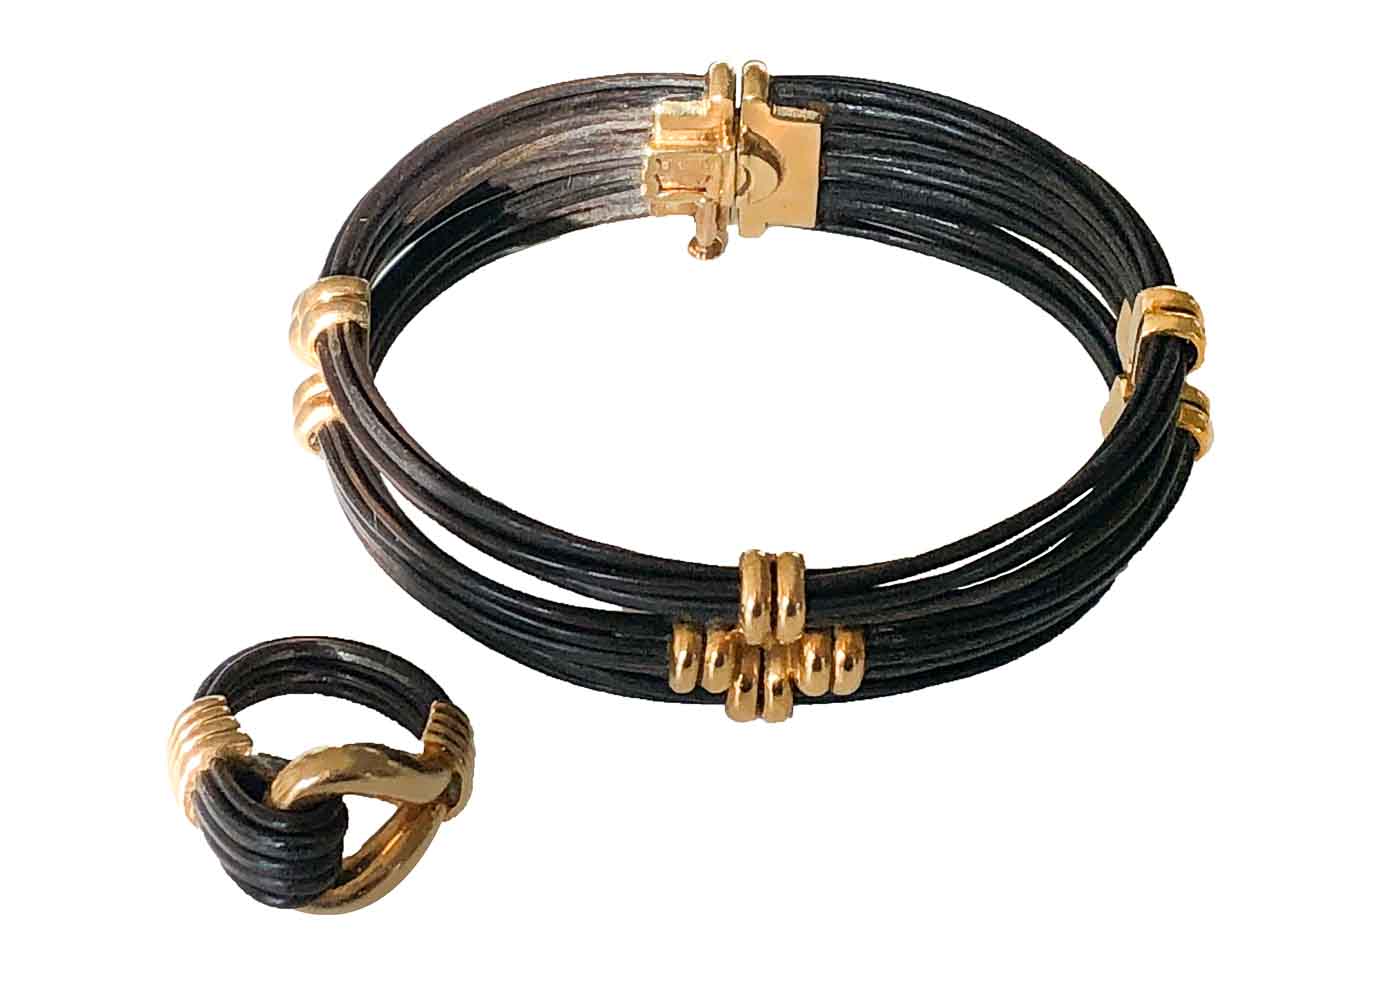 Elephant Knot Bracelet - Two-Tone Rose Gold - Mokoro Collection.com